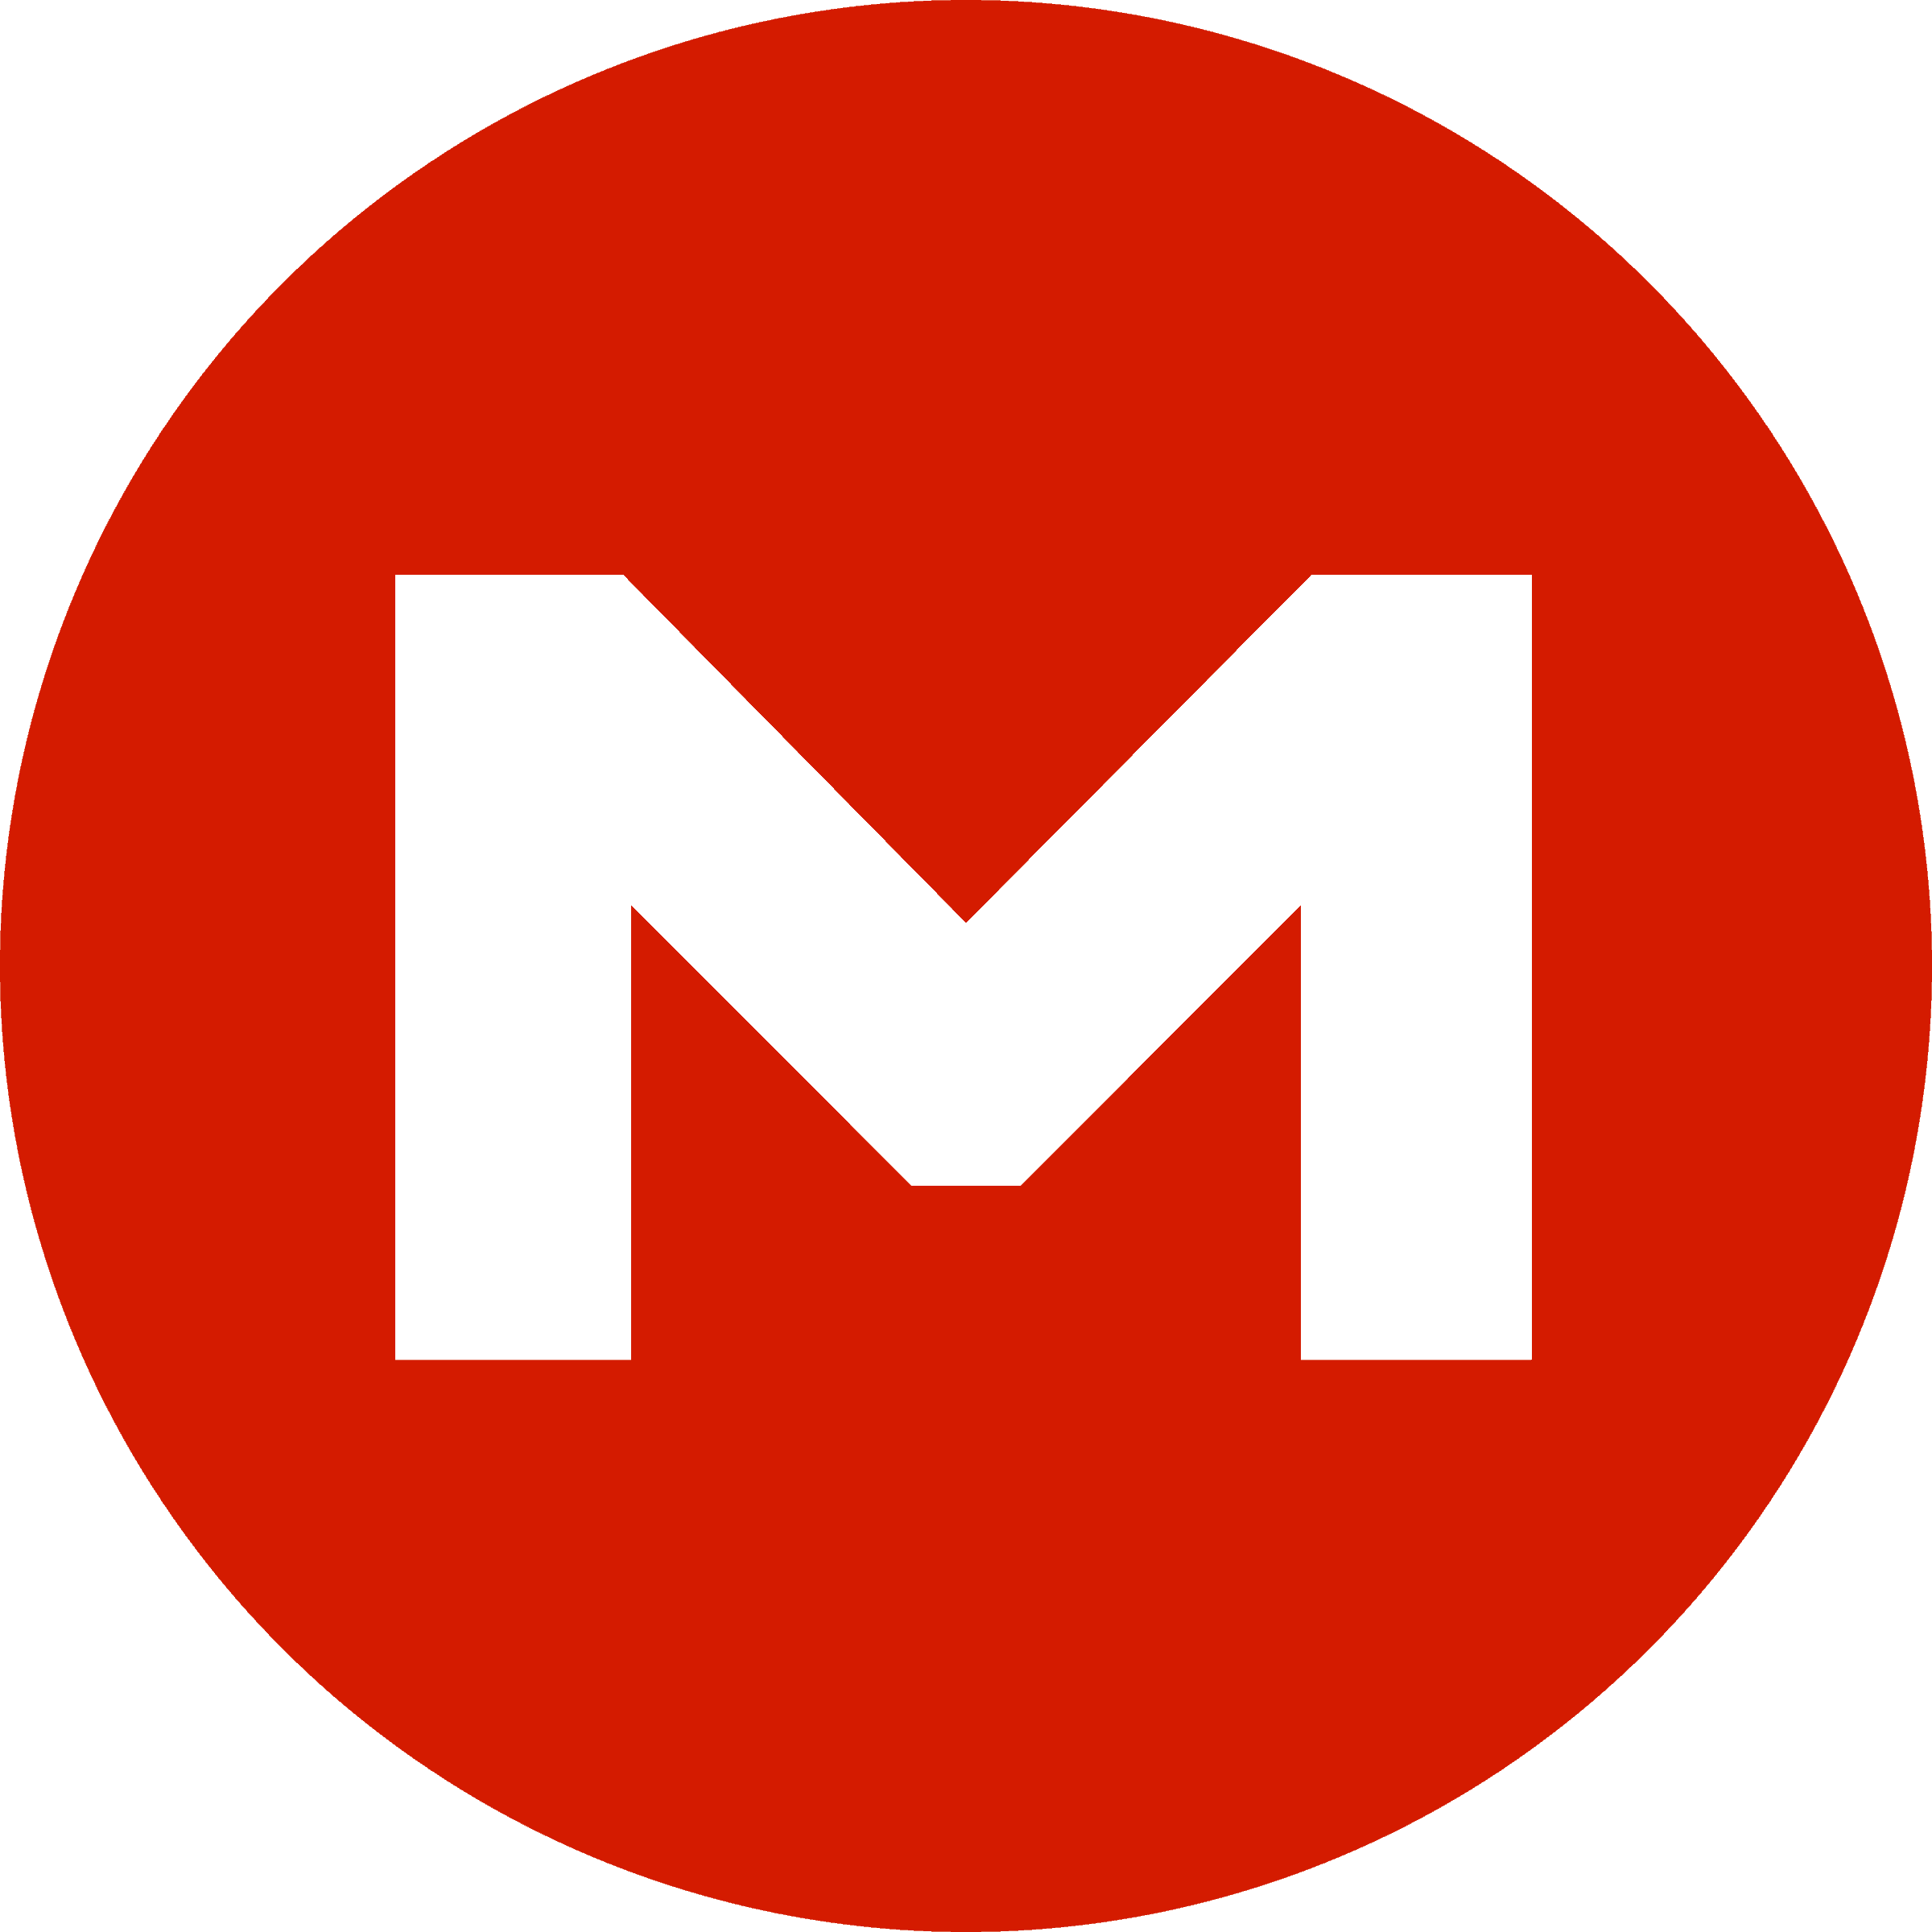 mega logo